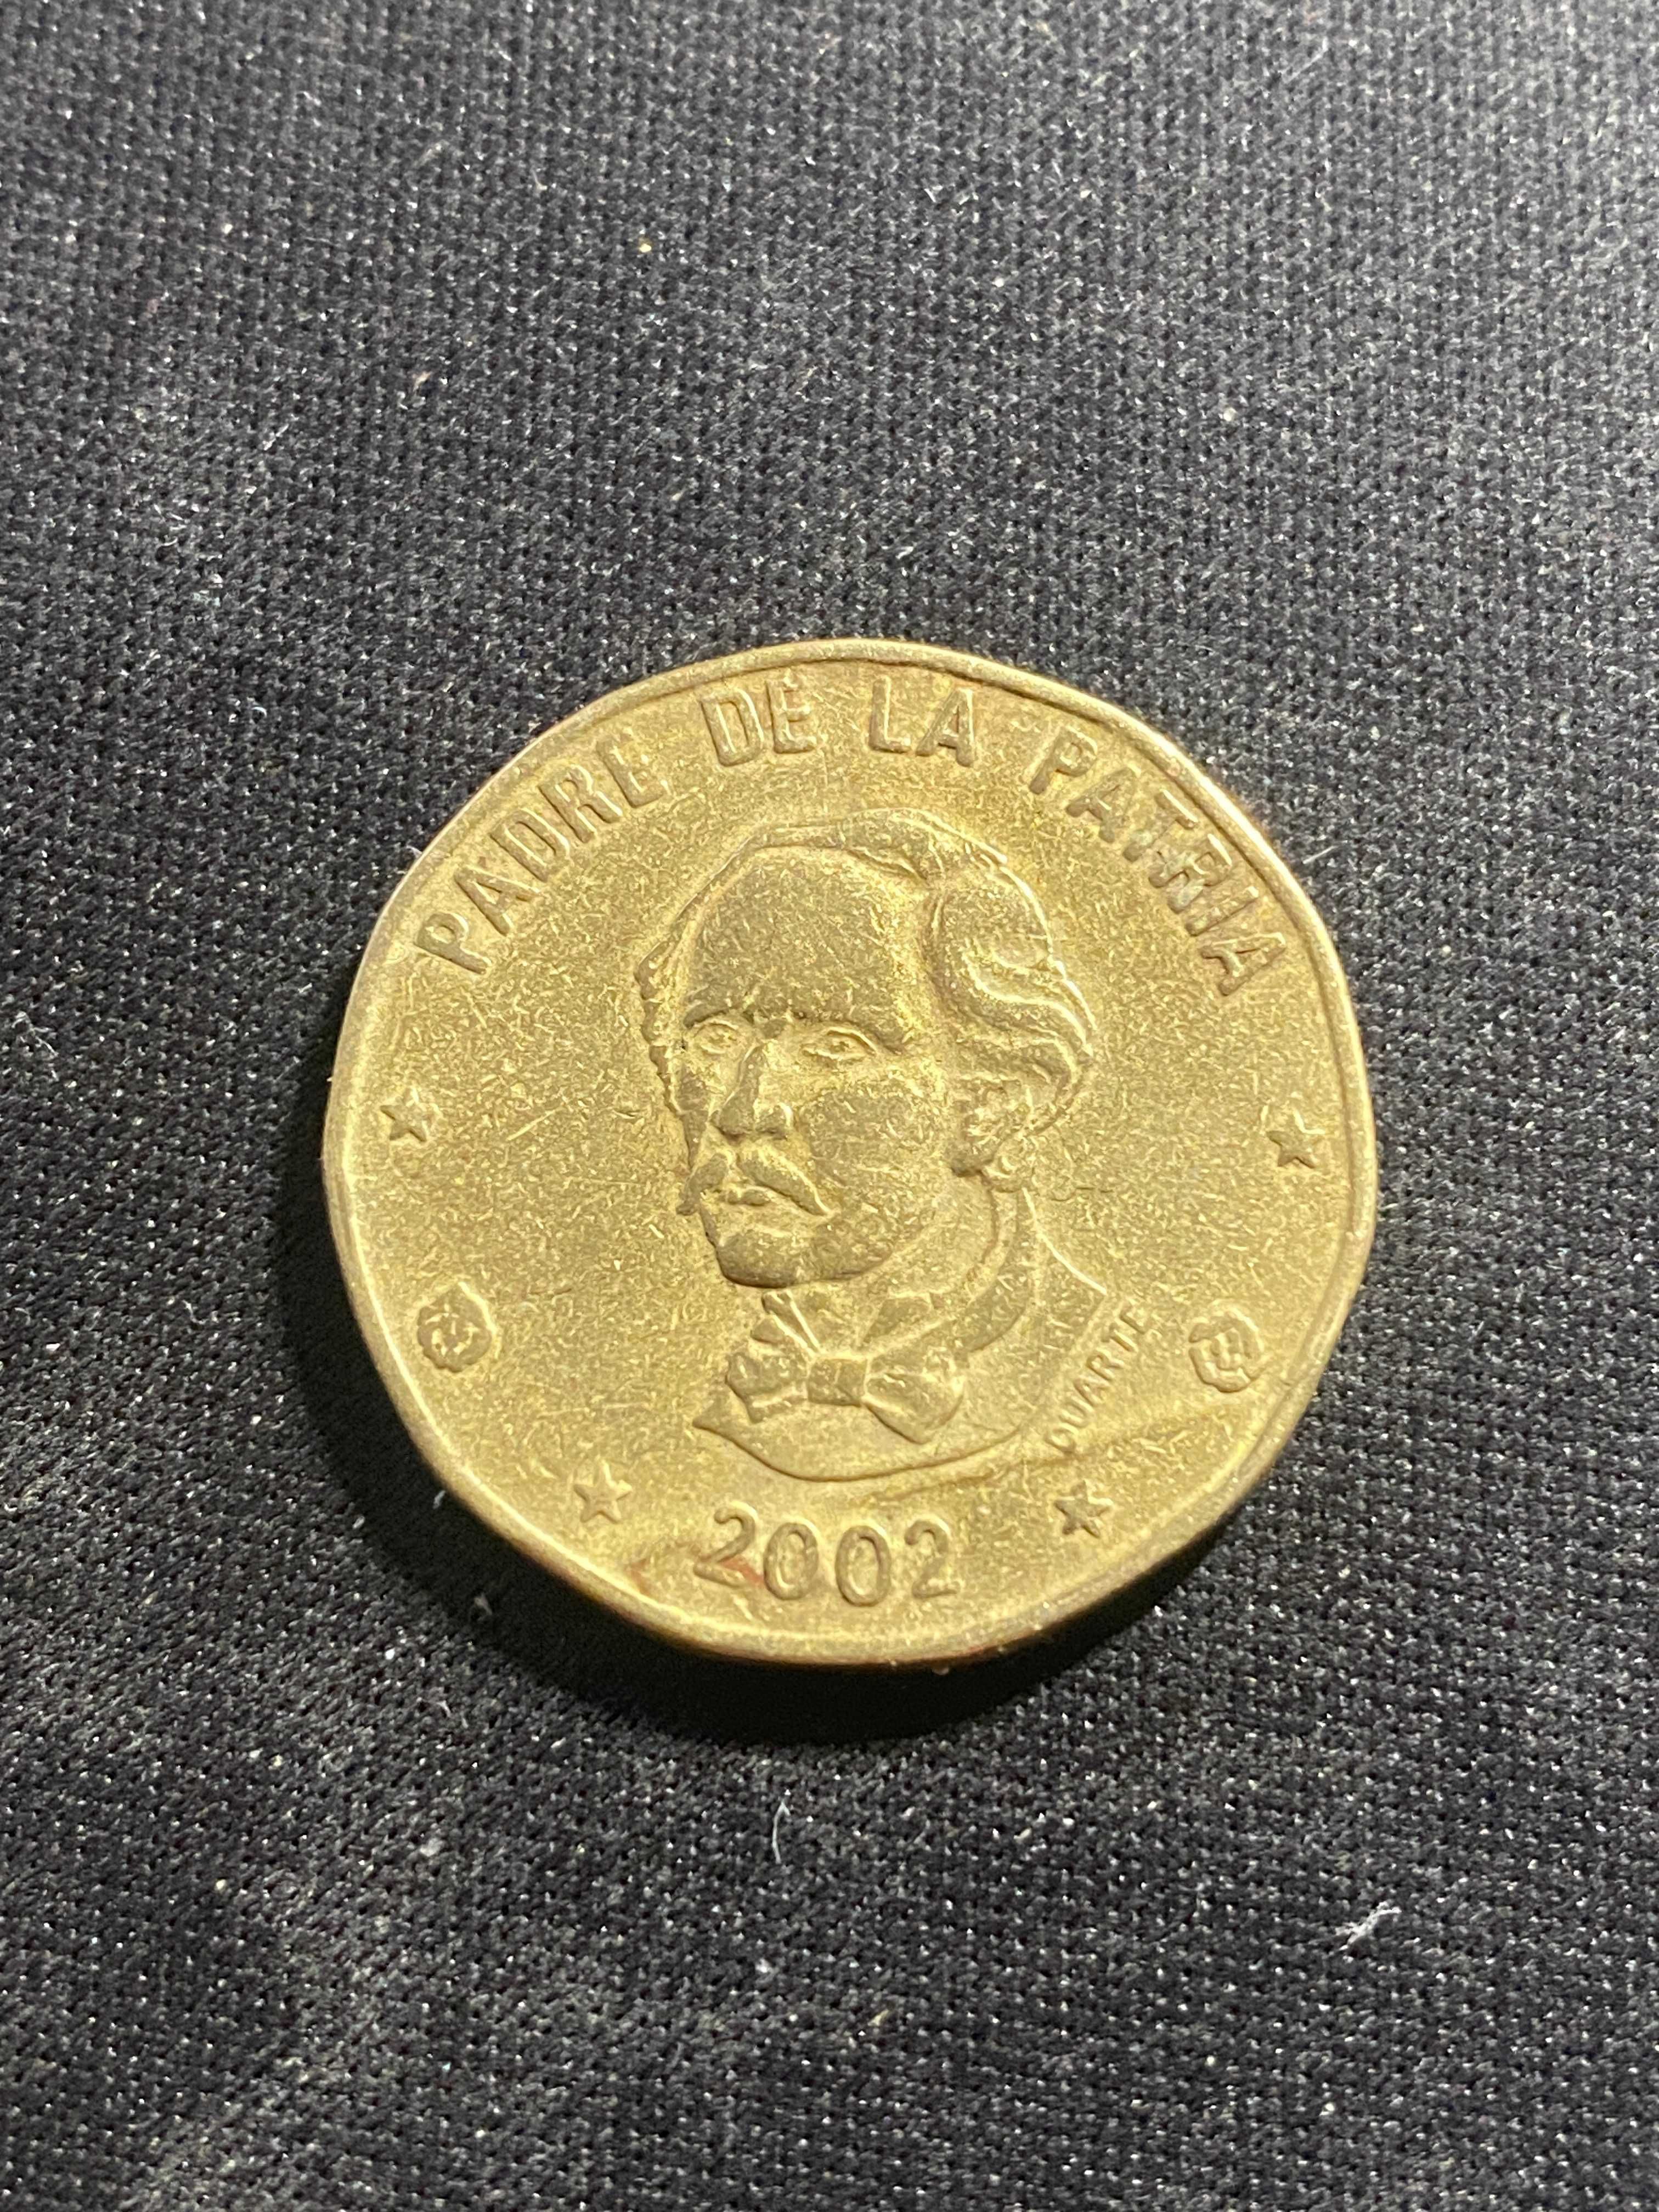 Moneta Dominikana - 1 PESO 2002r